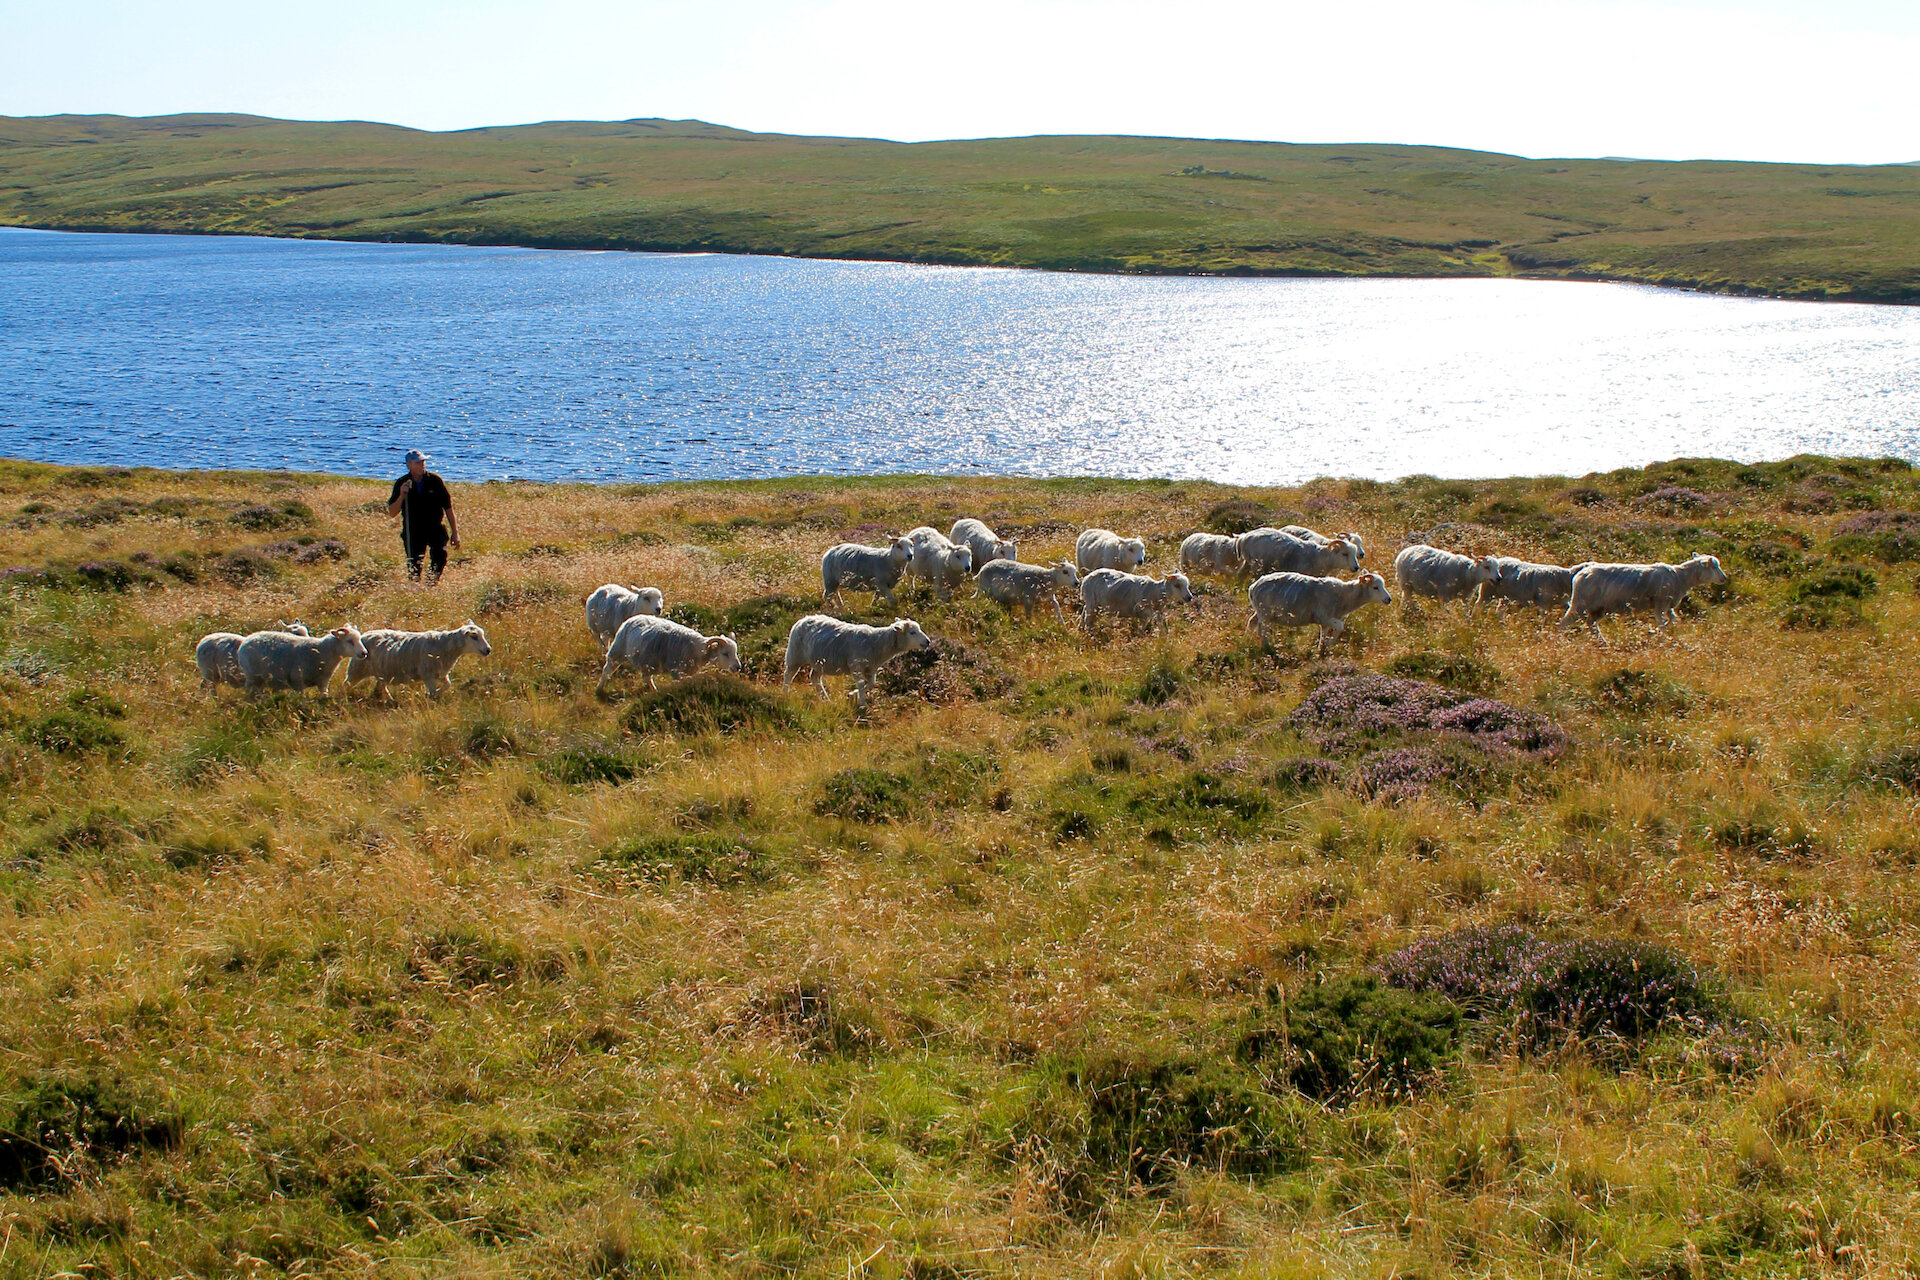 Shetland sheep grazing on the hill.